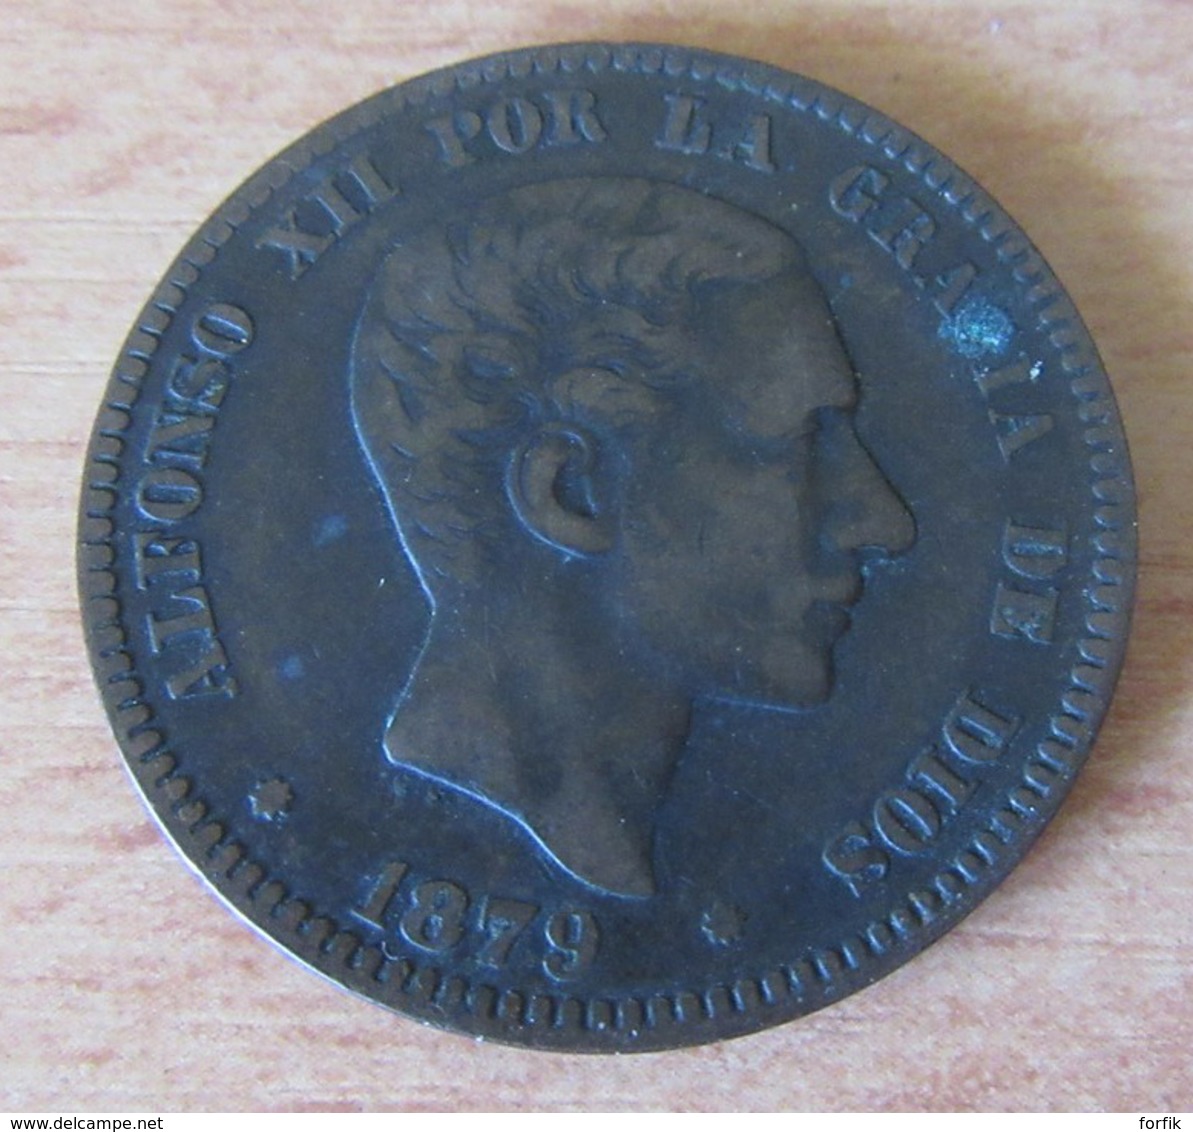 Espagne / Espana - Monnaie Diez (10) Centimos Alfonso XII 1879 OM - Primeras Acuñaciones